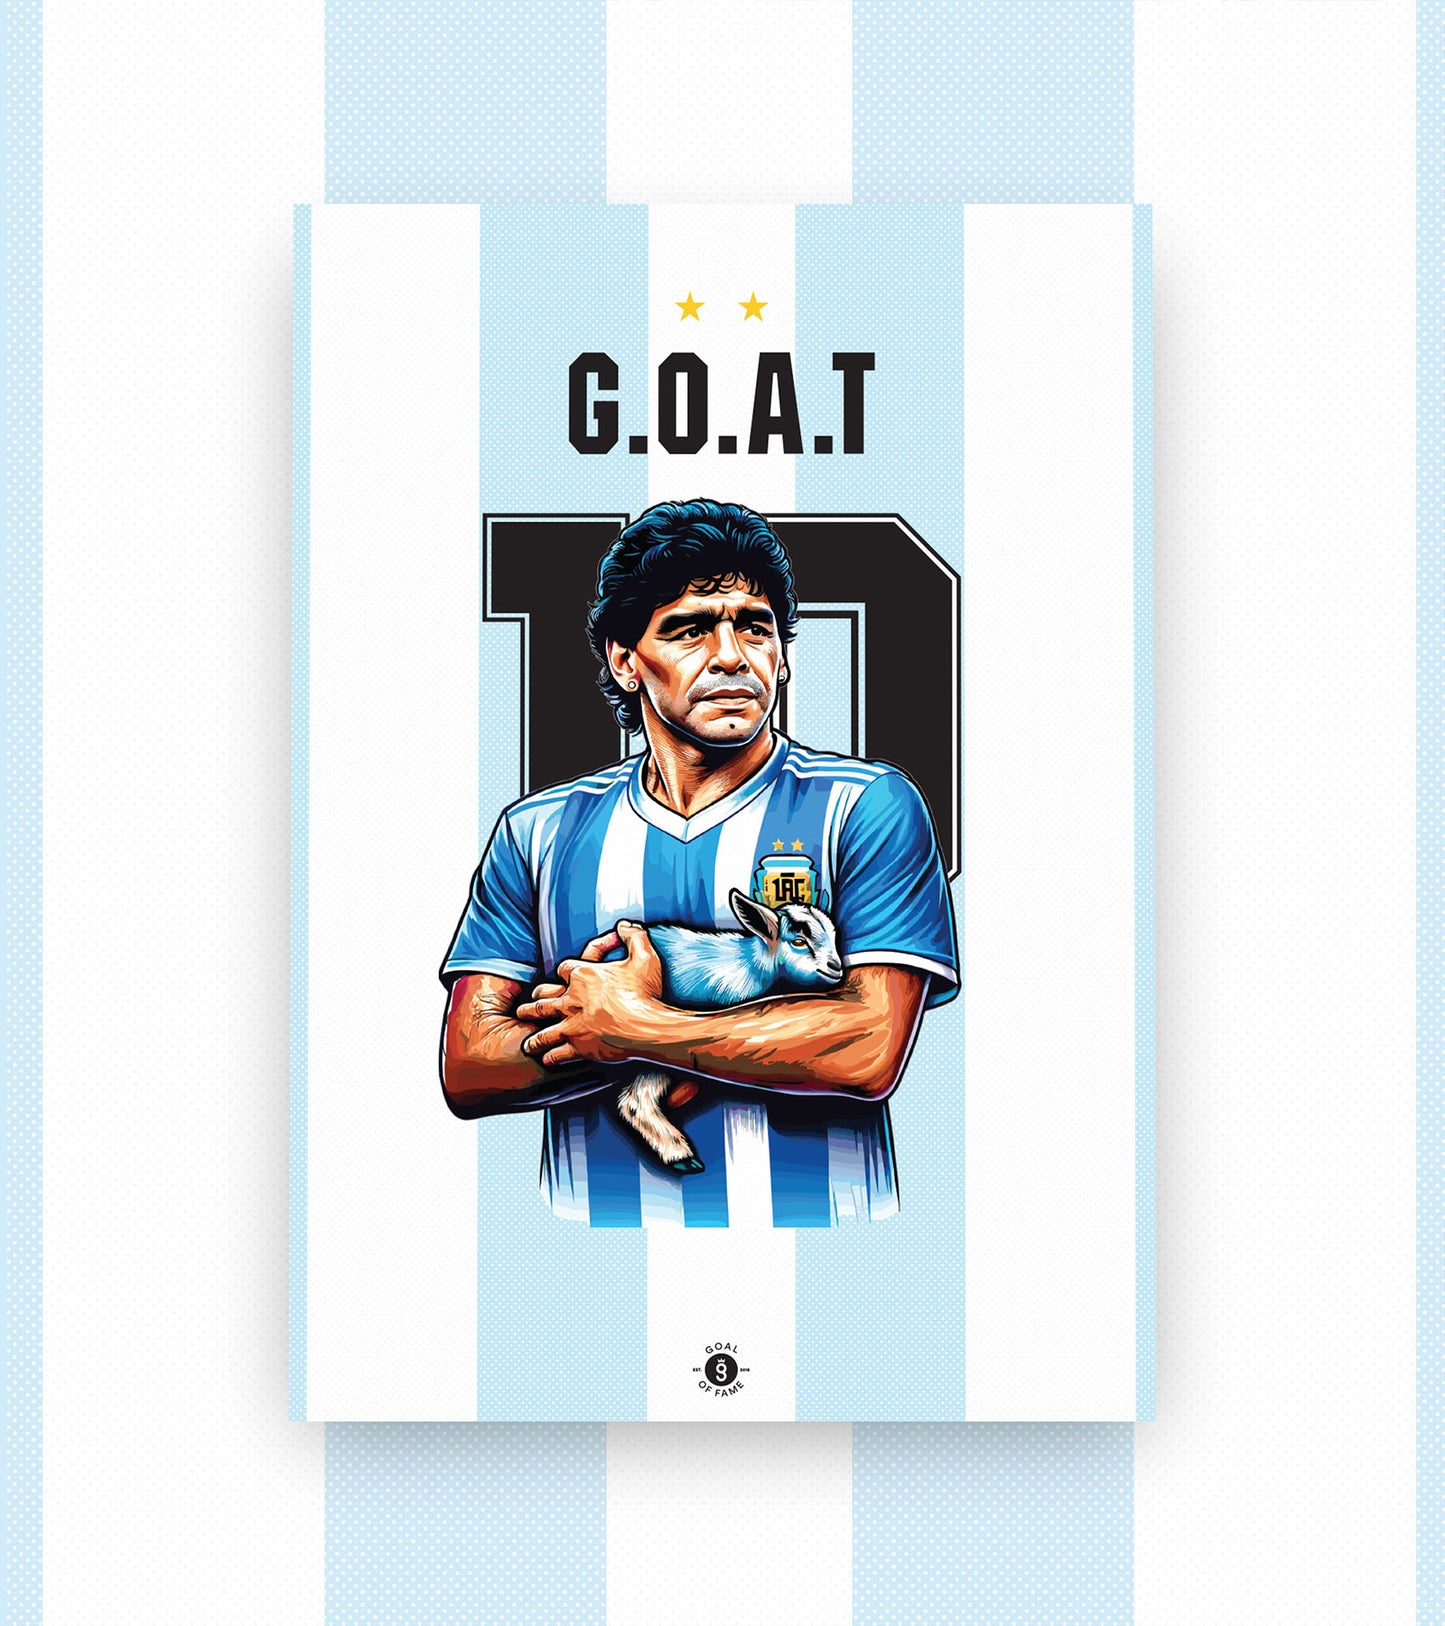 Maradona is the G.O.A.T.